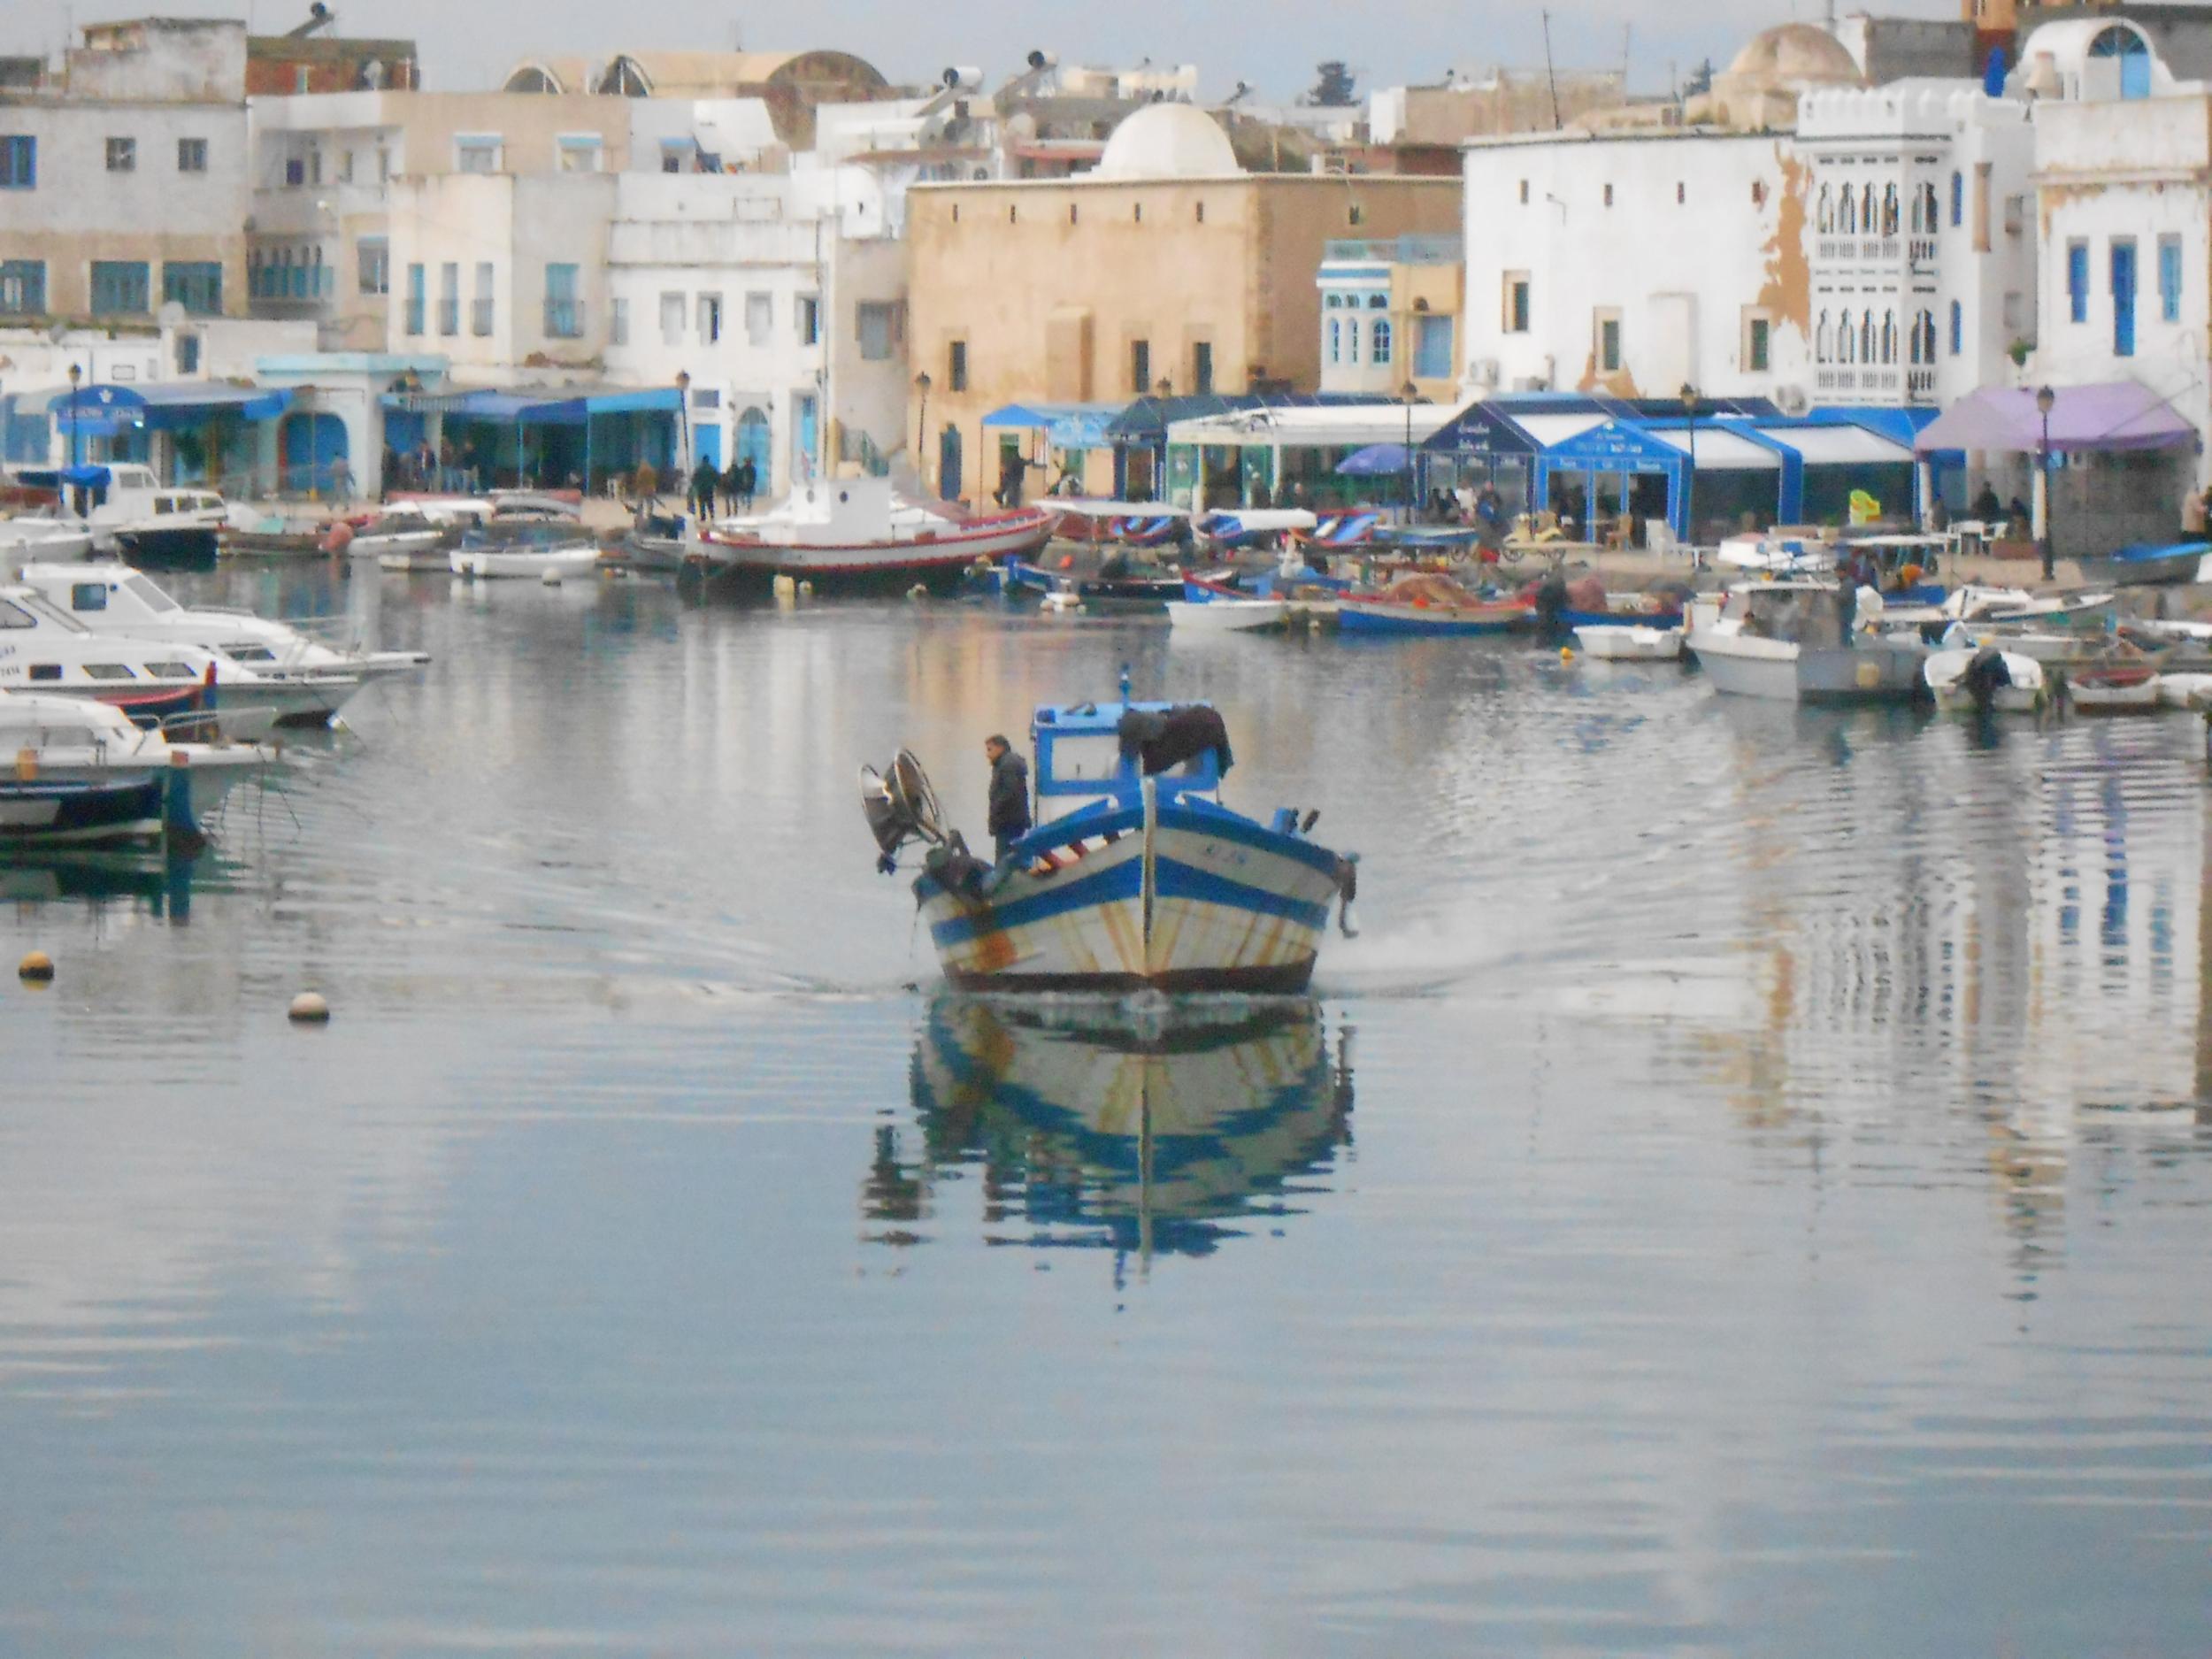 Too risky? The Tunisian fishing port of Bizerte